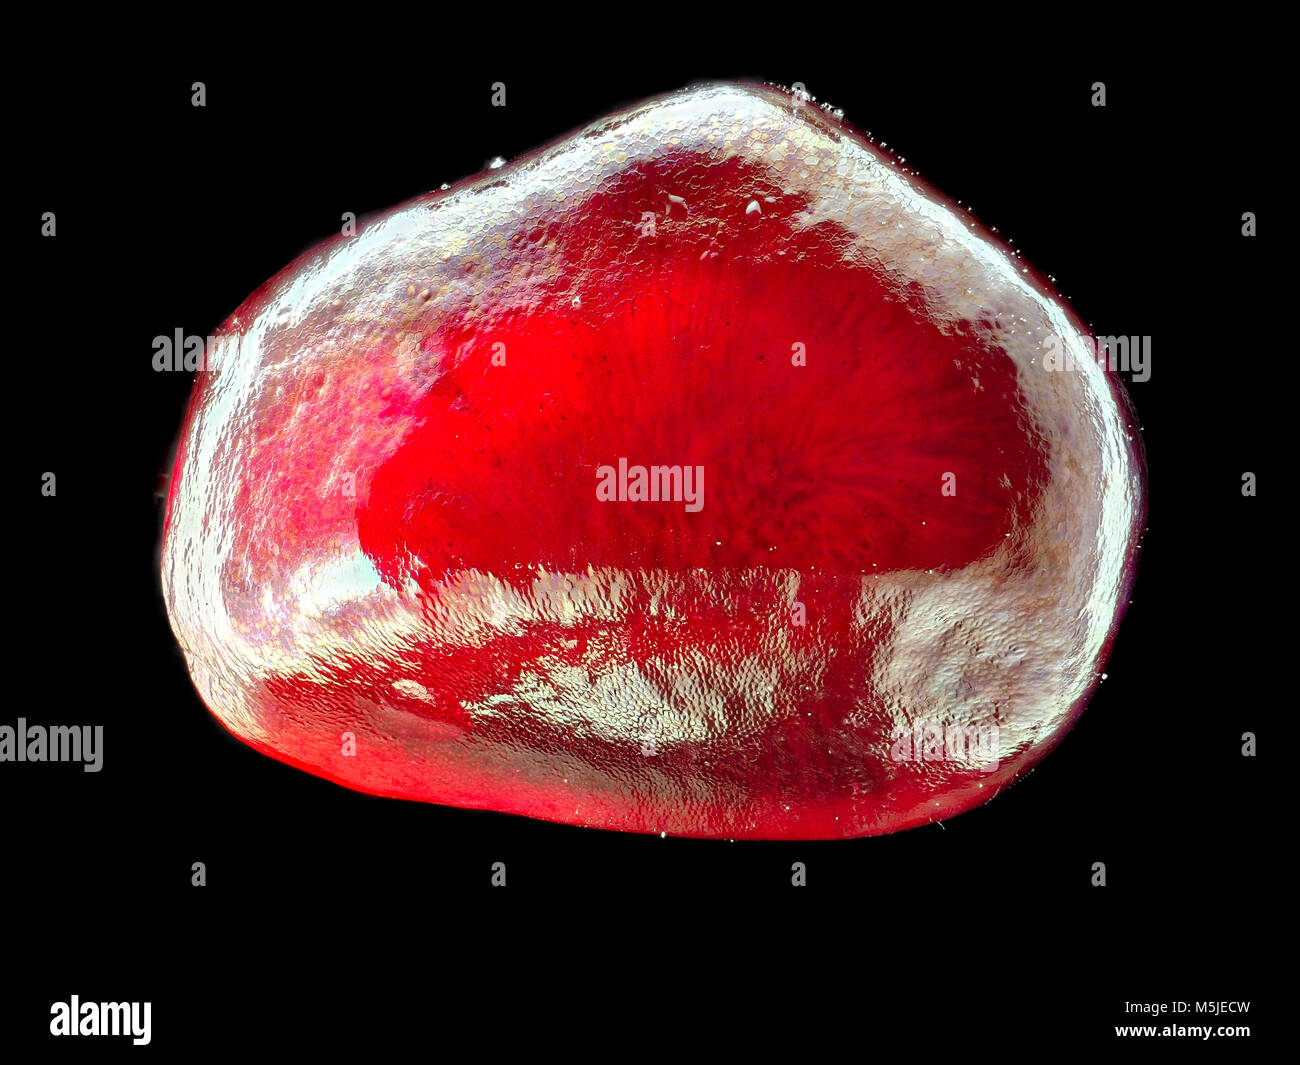 Pomegranate seed (aril) macro photography Stock Photo